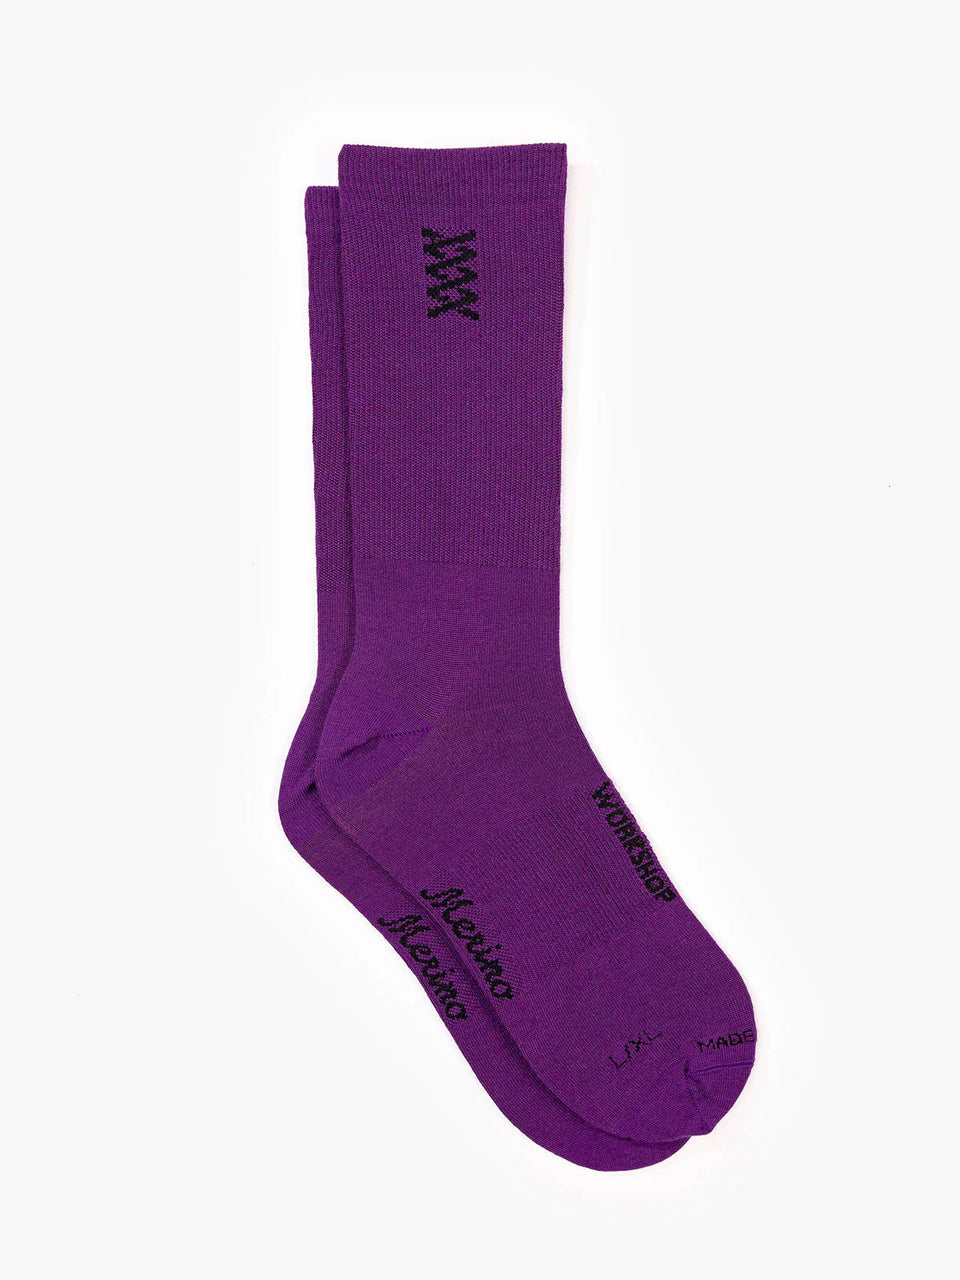 Mission Pro Wool Blend Socks